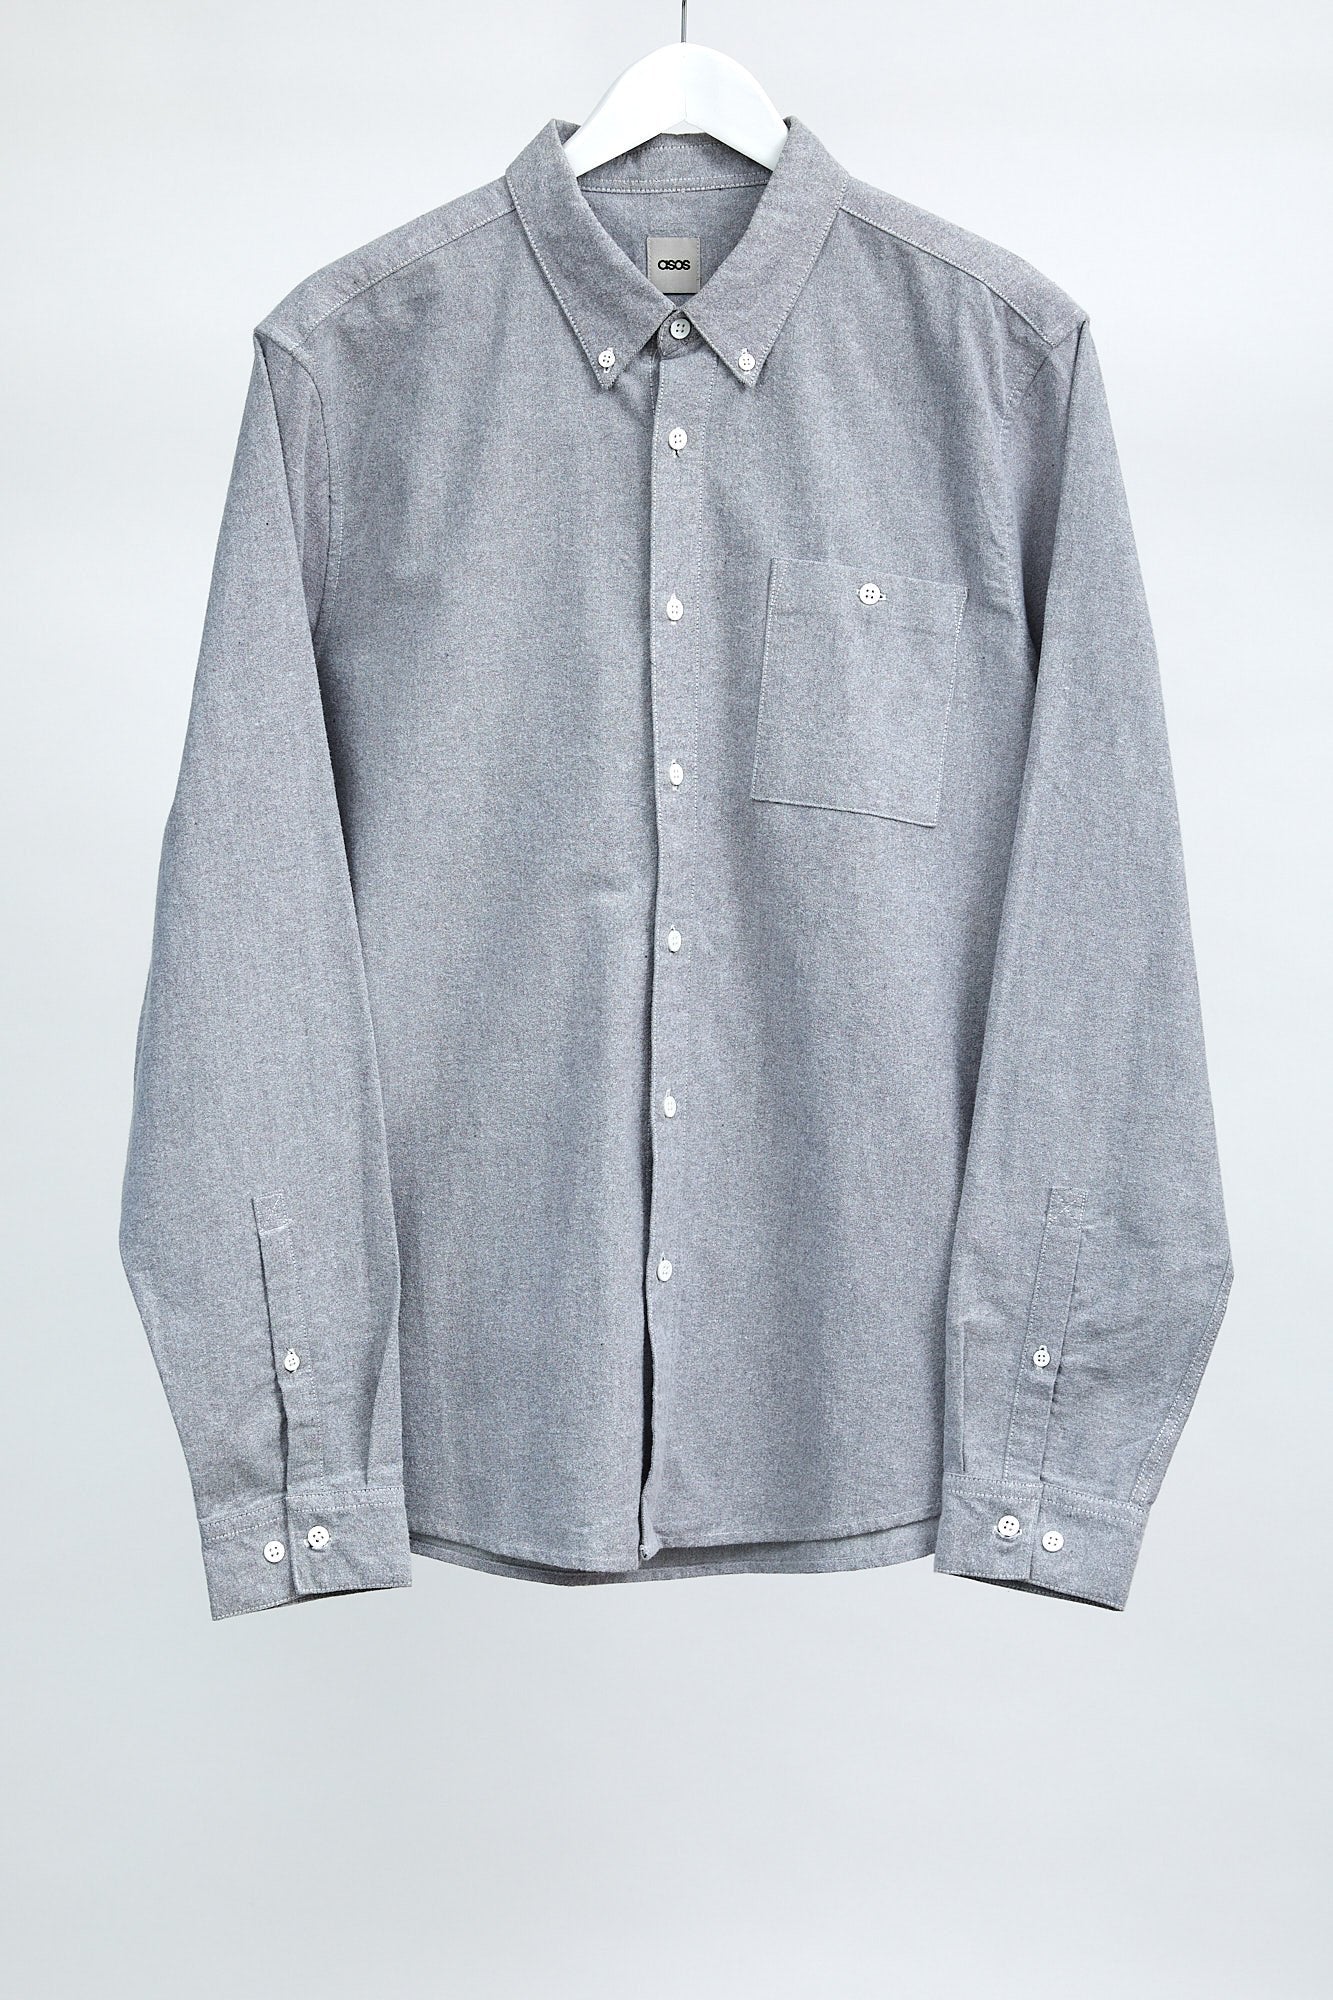 Mens ASOS Grey Shirt: Size Large